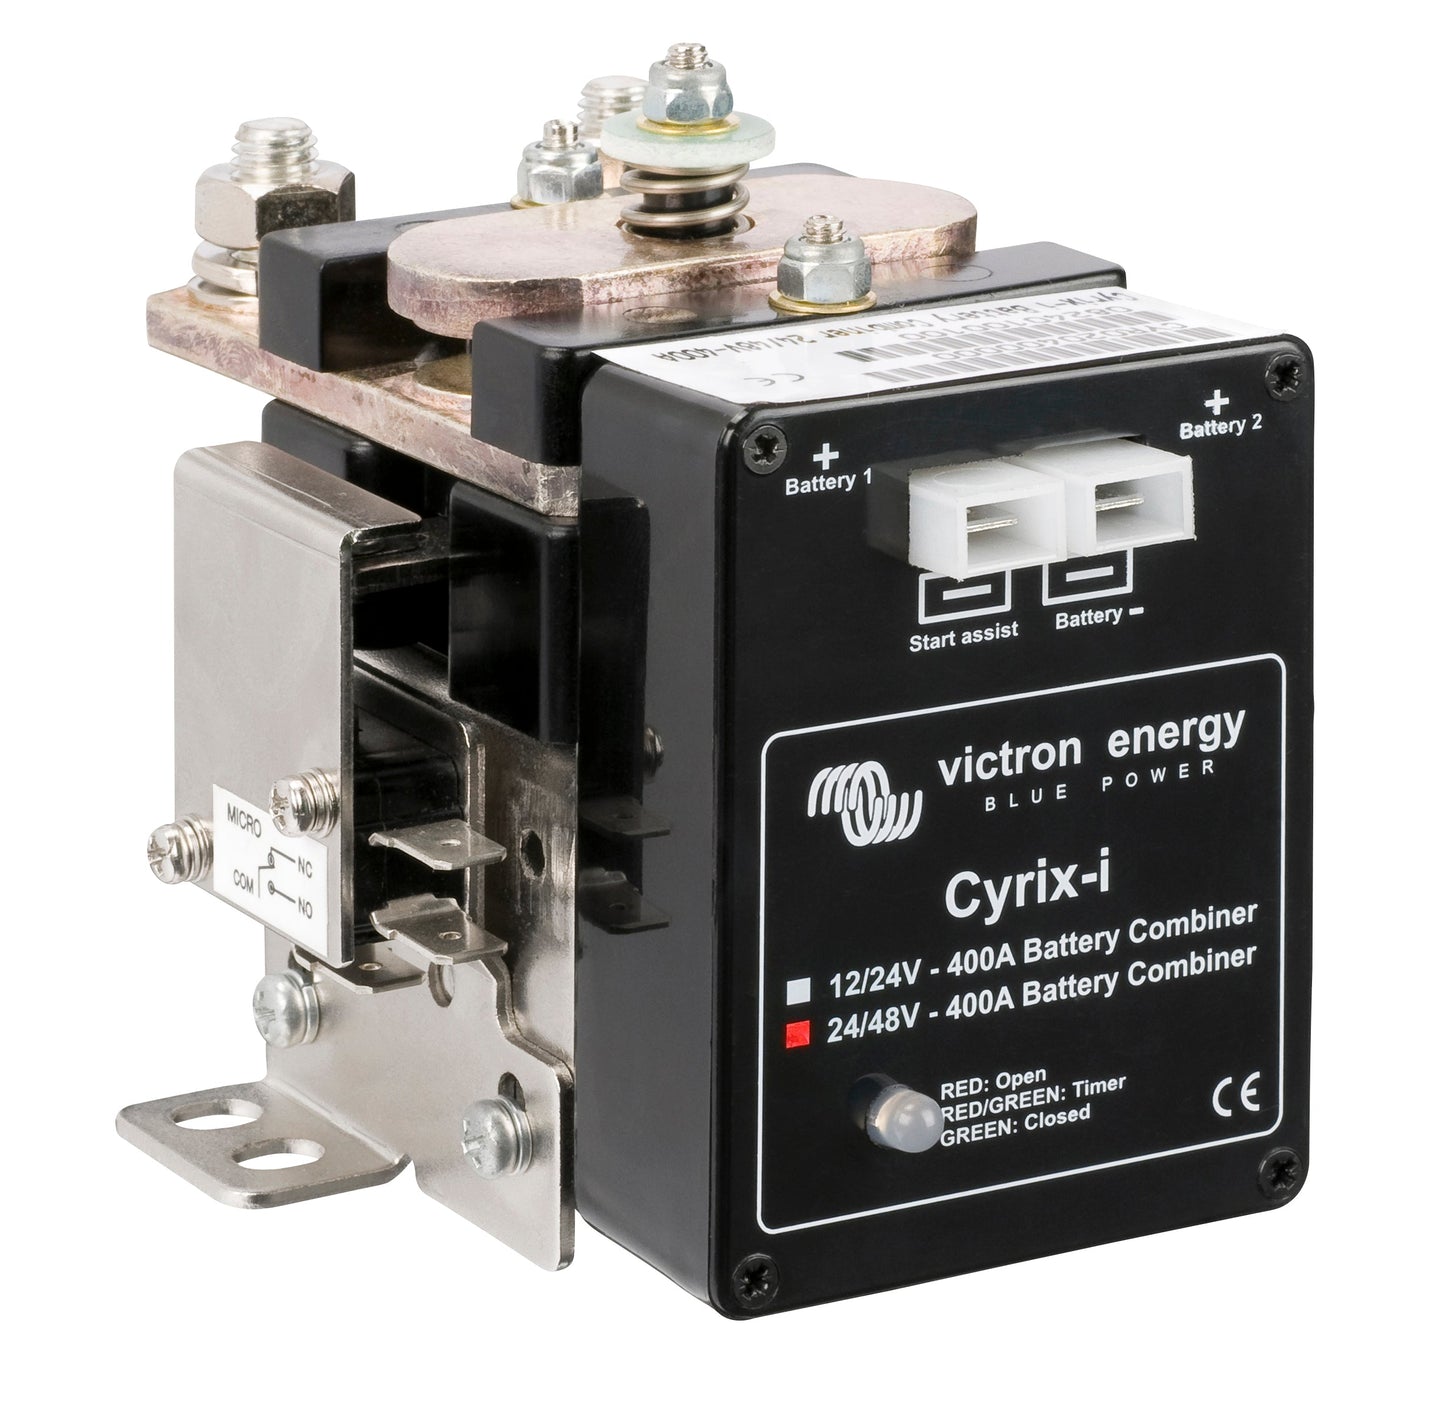 Victron Battery Combiner Cyrix CYR020400000 Cyrix-i 24/48V-400A intelligent battery combiner